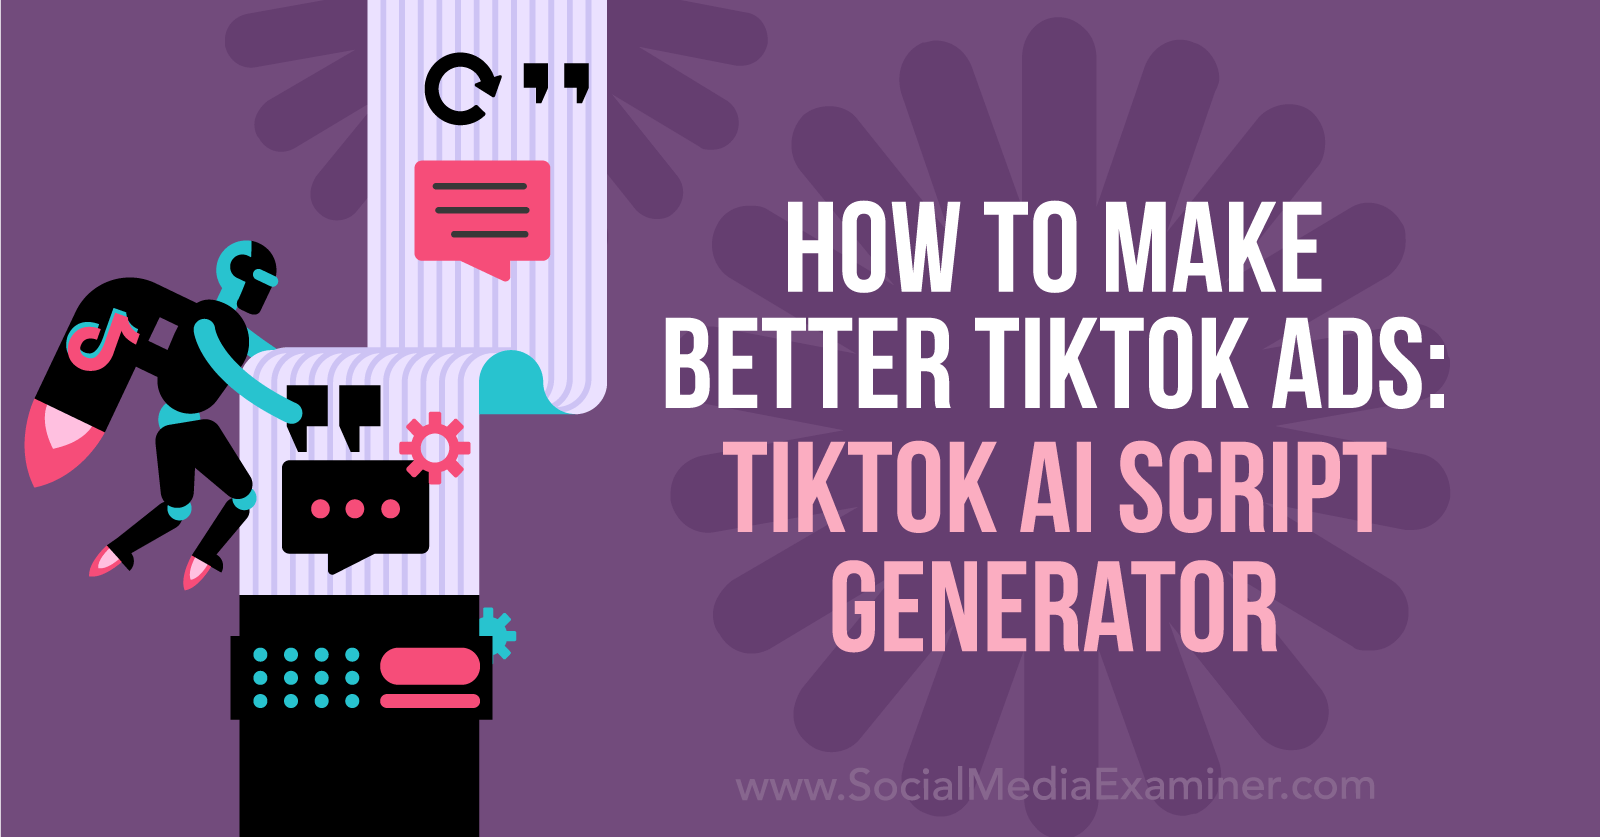 How to Make Better TikTok Ads: TikTok AI Script Generator by Social Media Examiner